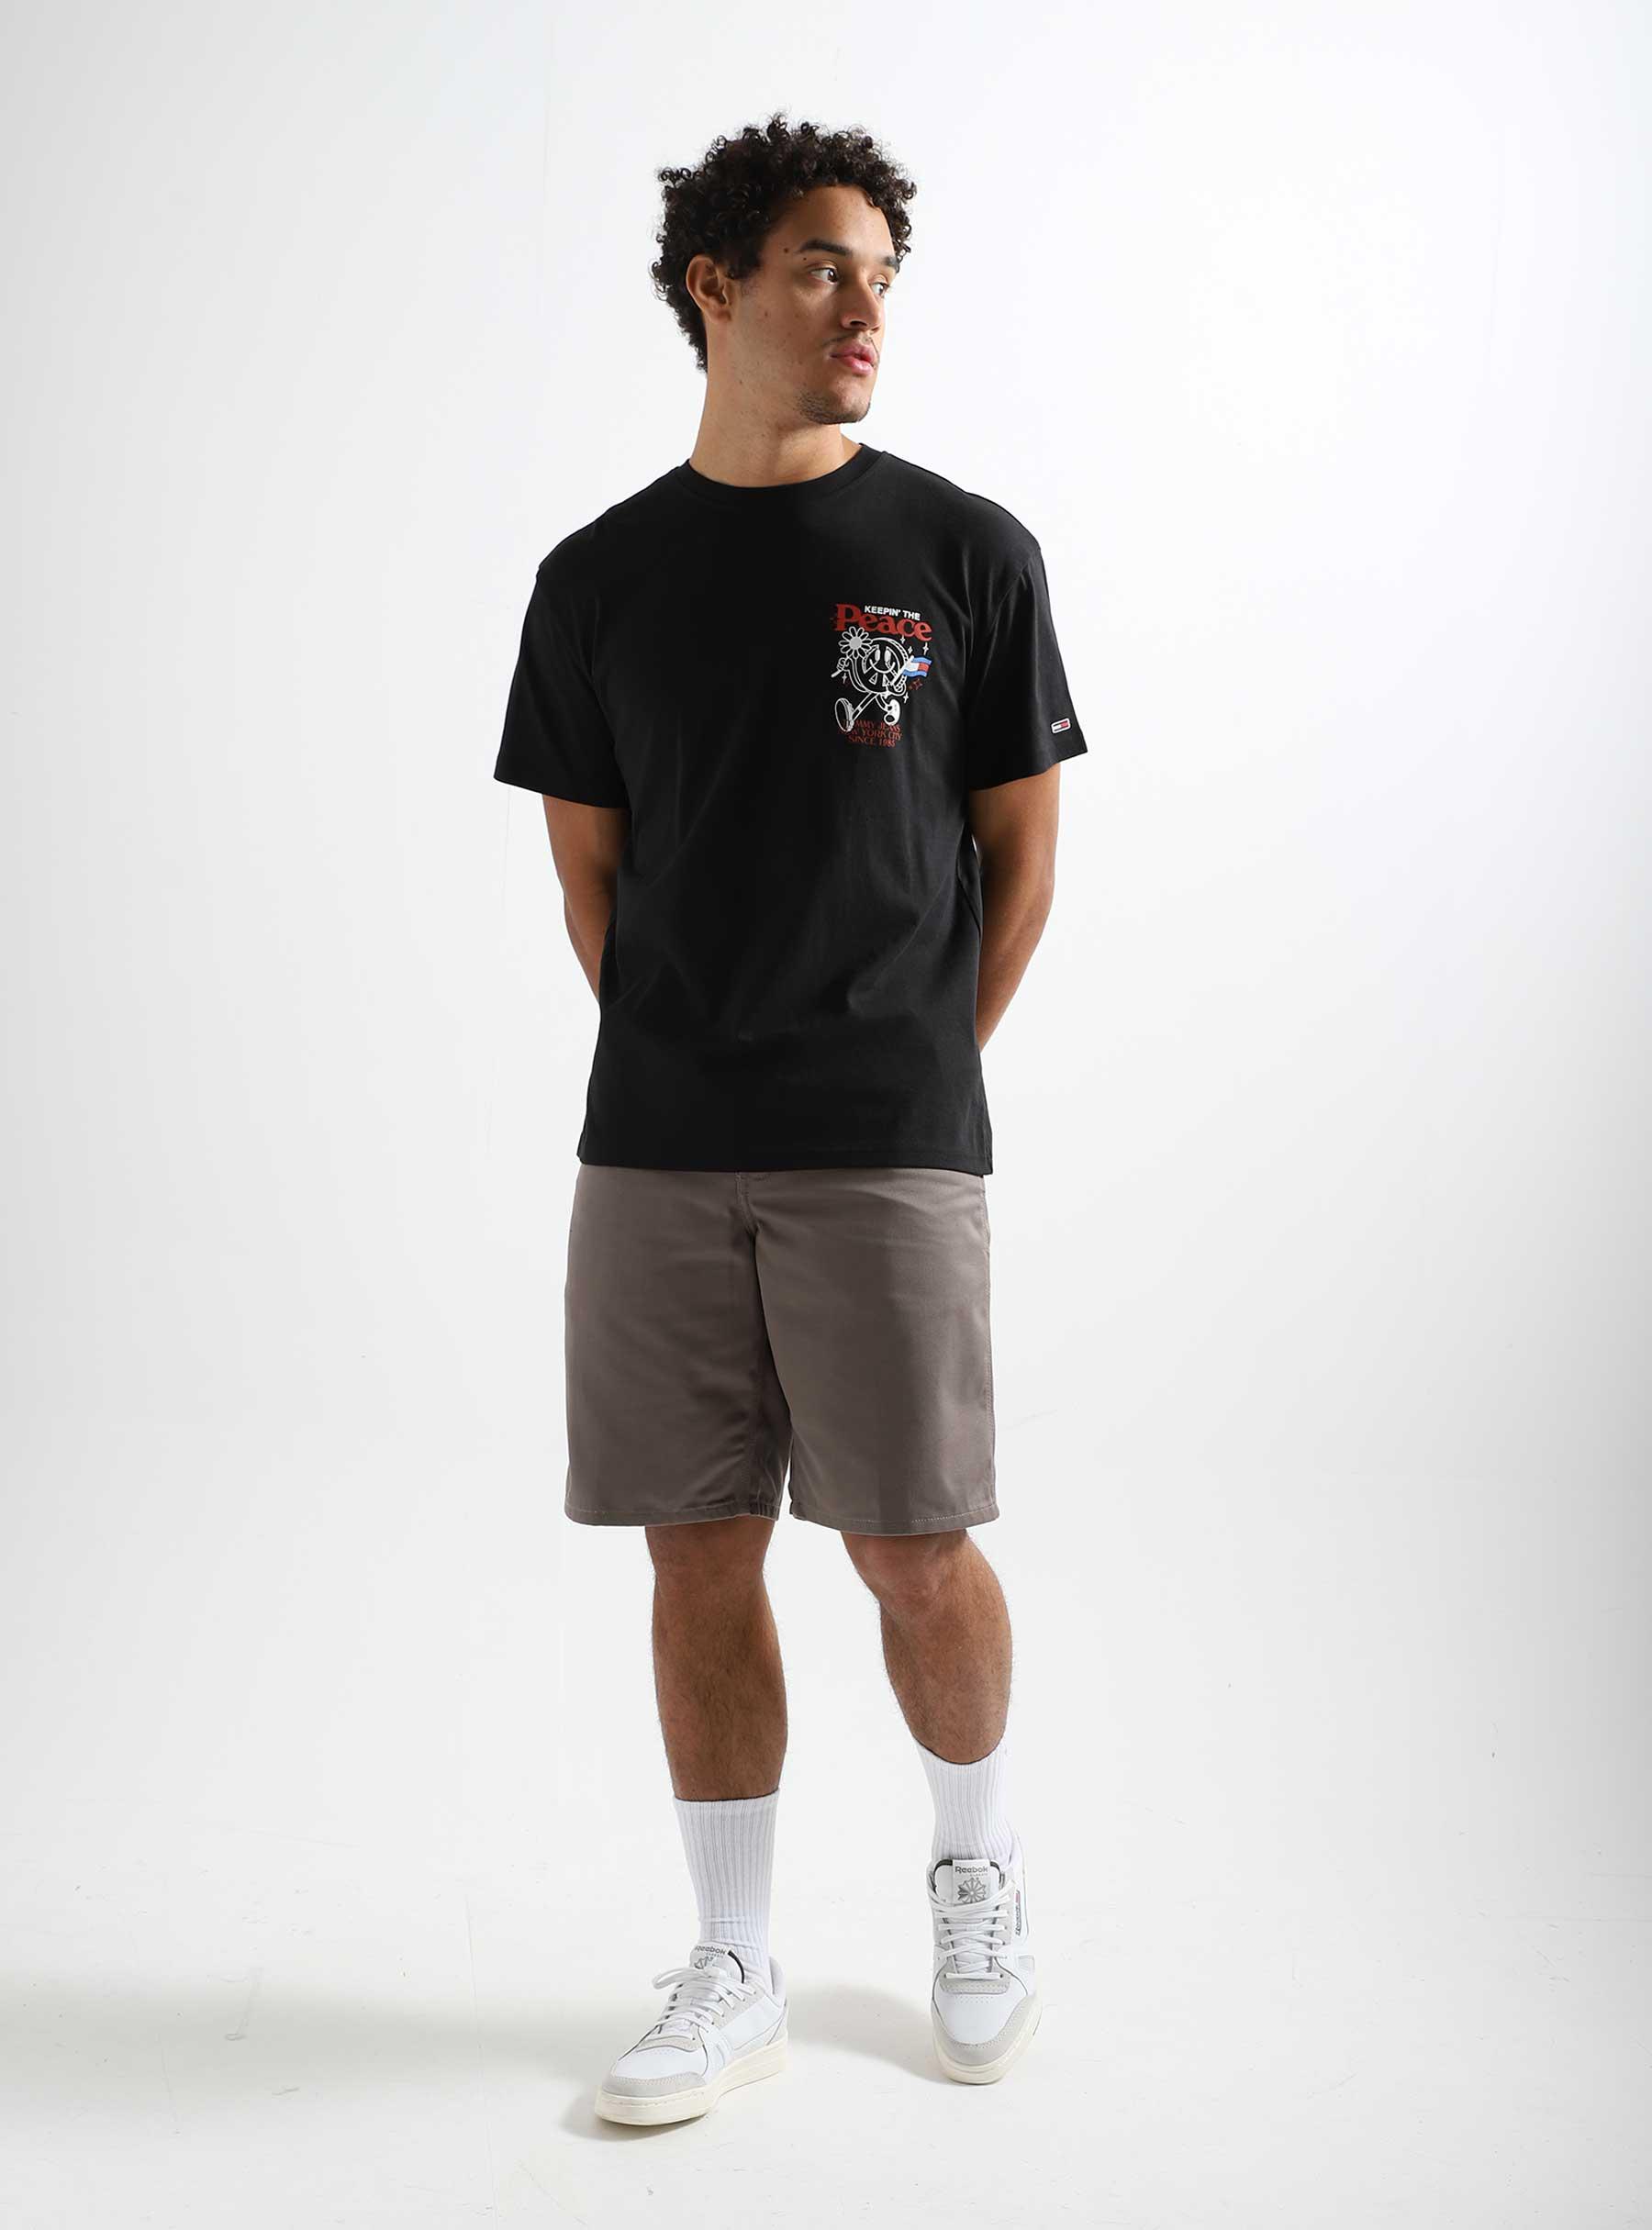 TJM - Homegrown T-shirt Black Smiley Tommy Freshcotton Jeans